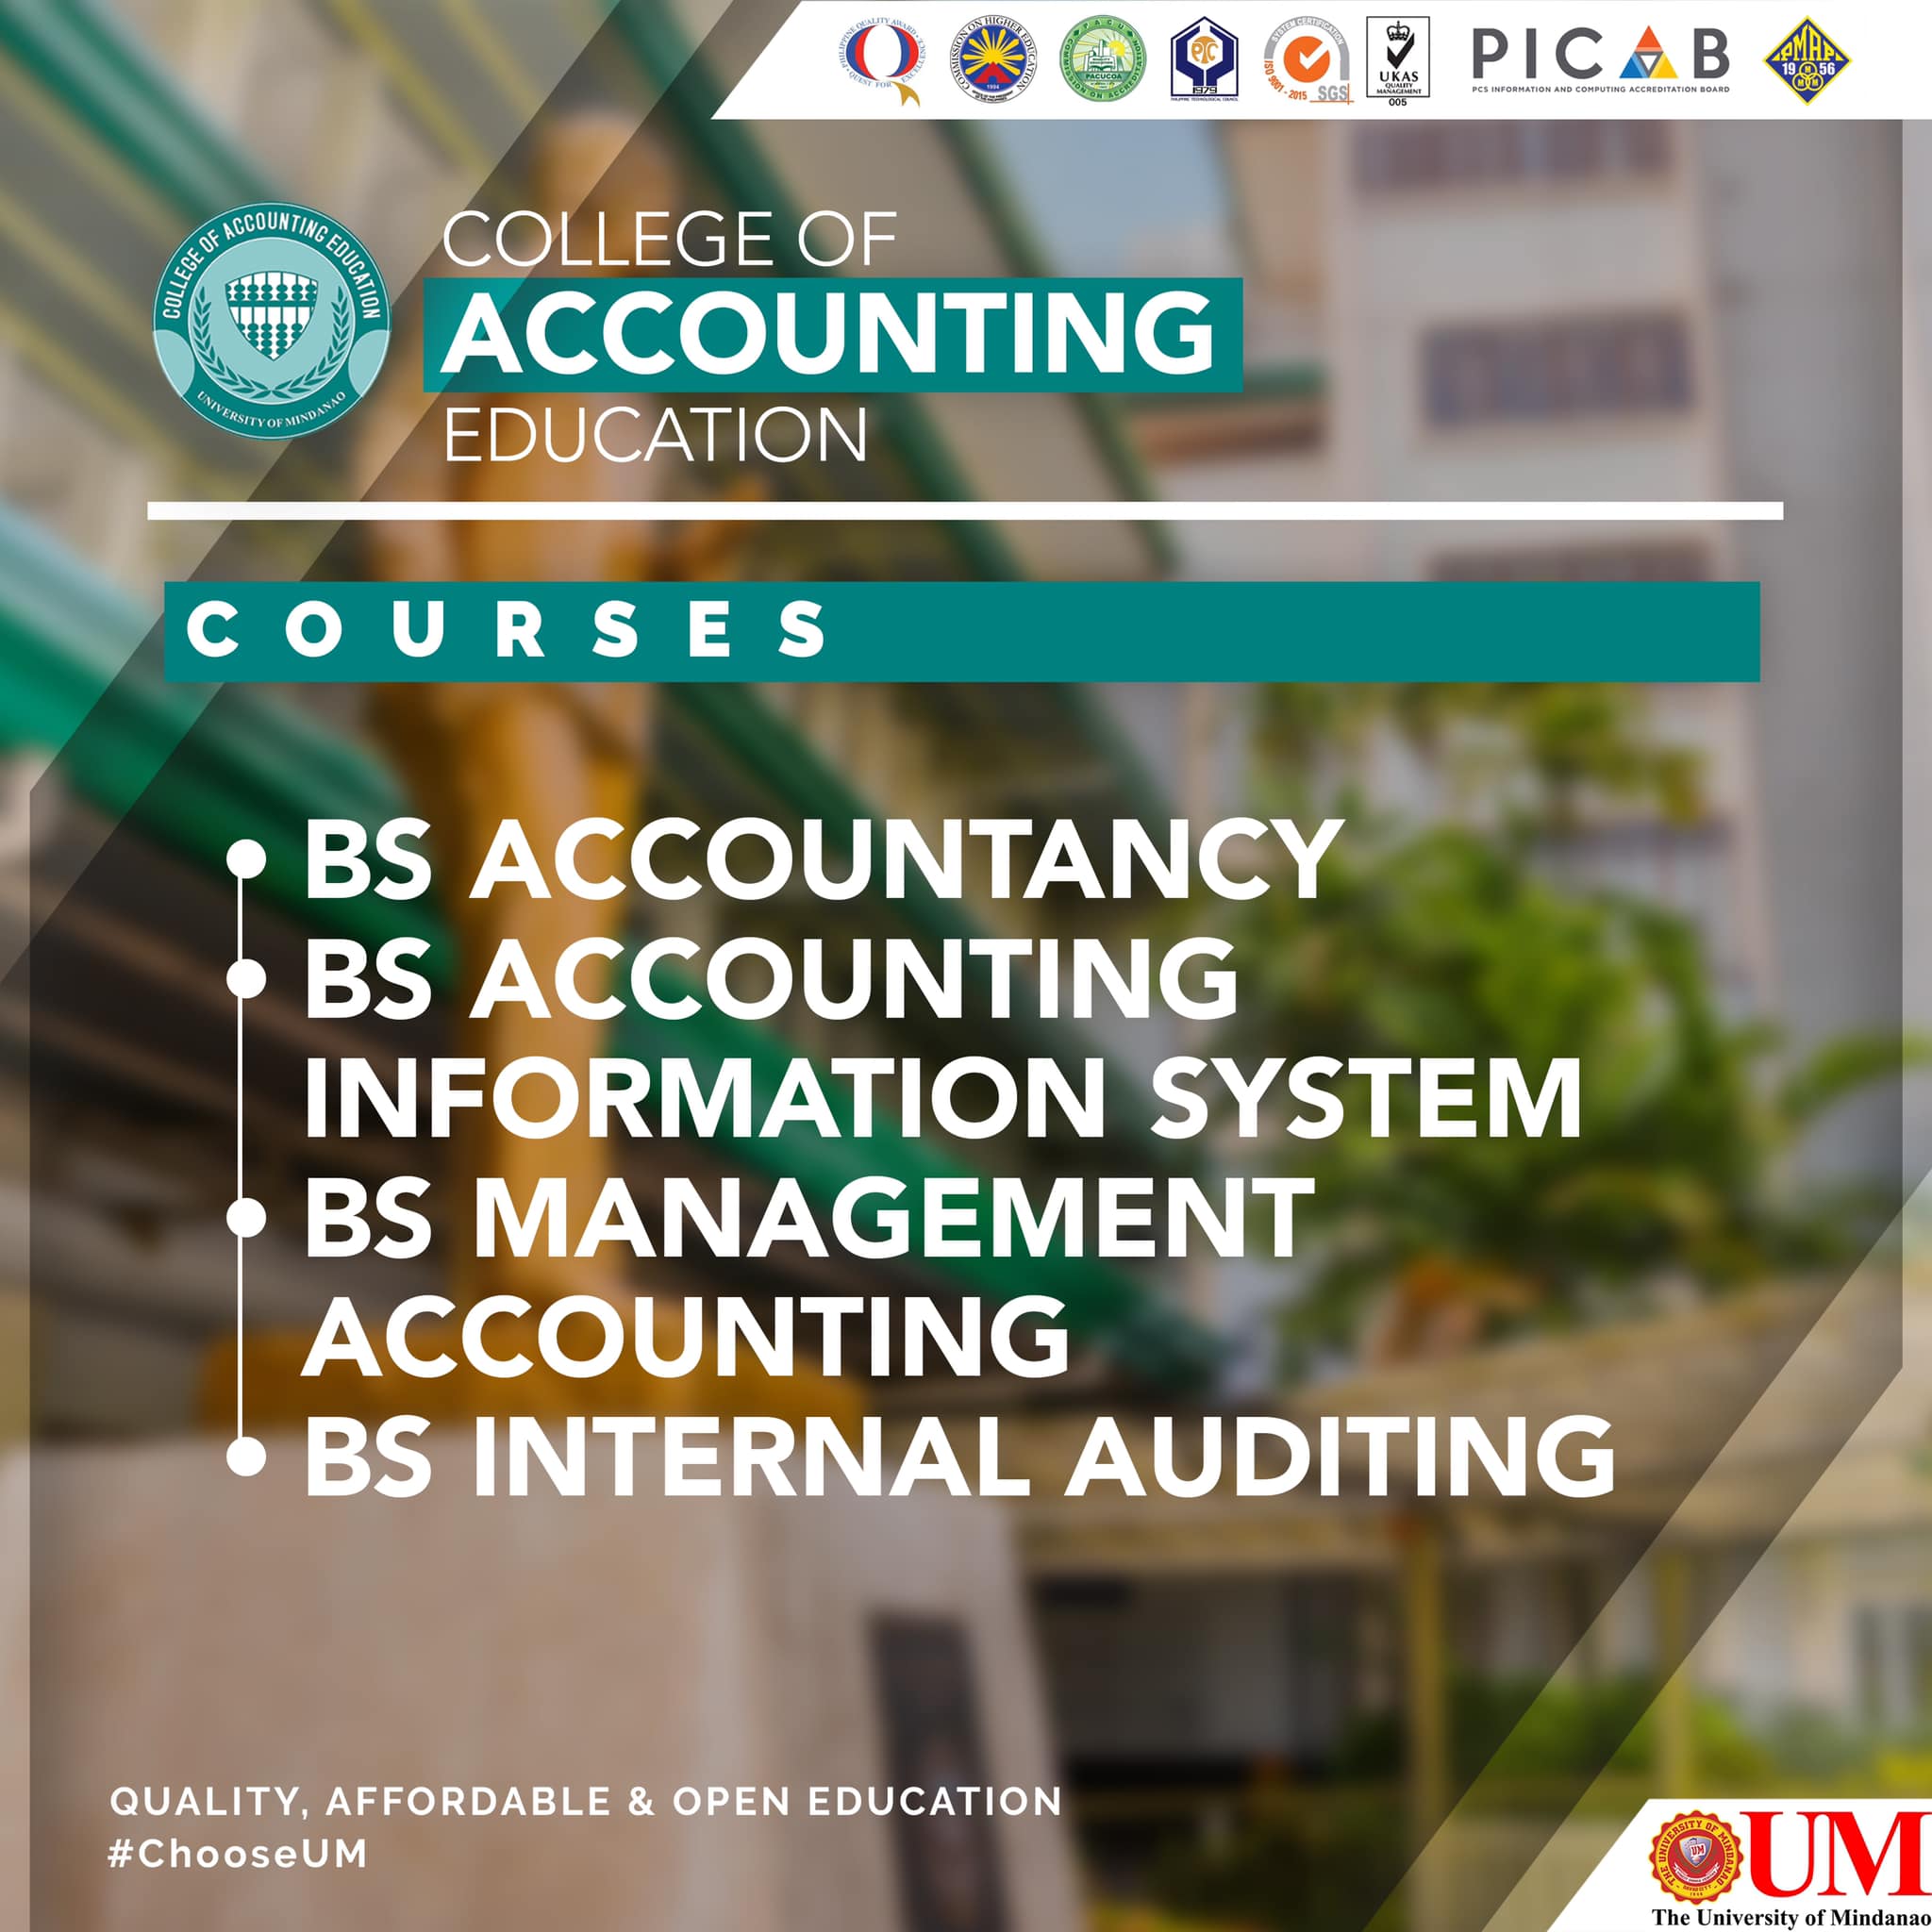 In focus: UM's College of Accounting Education